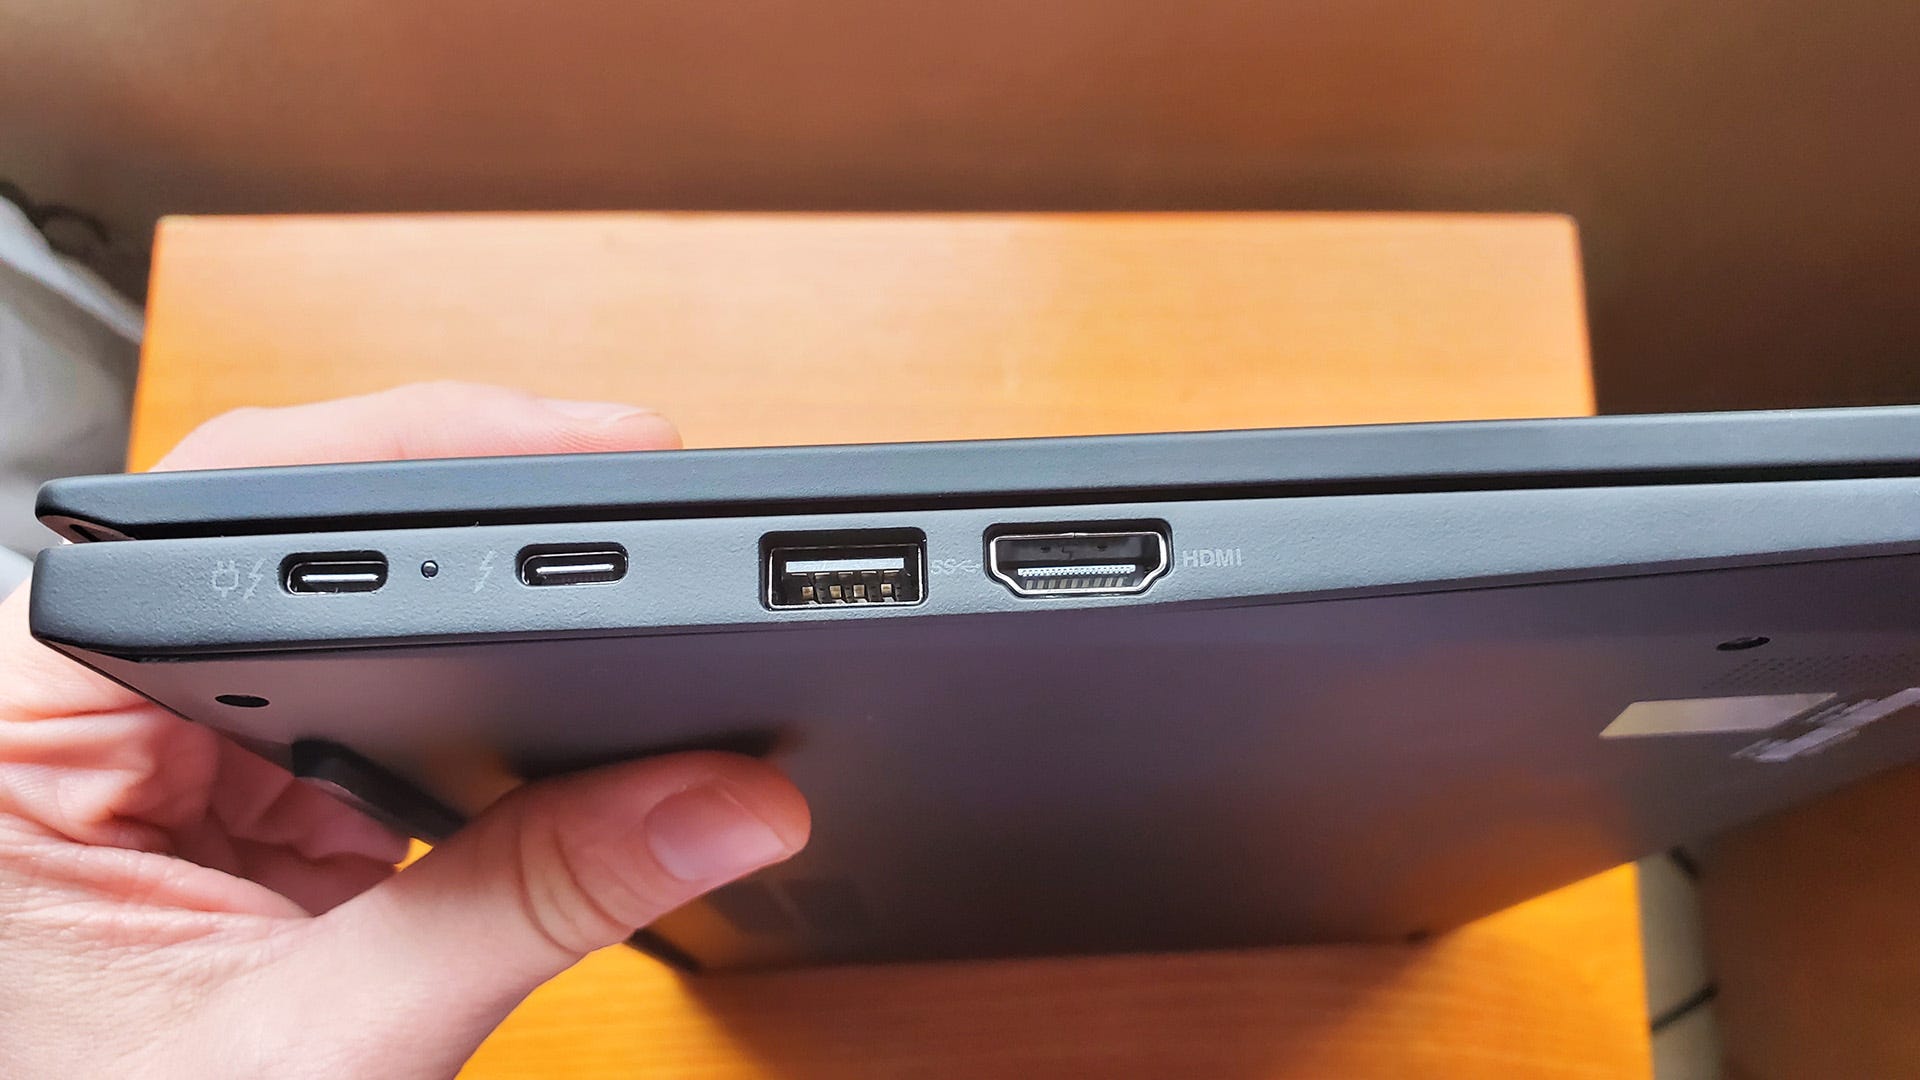 The Lenovo ThinkPad X1 Carbon laptop's plentiful ports.